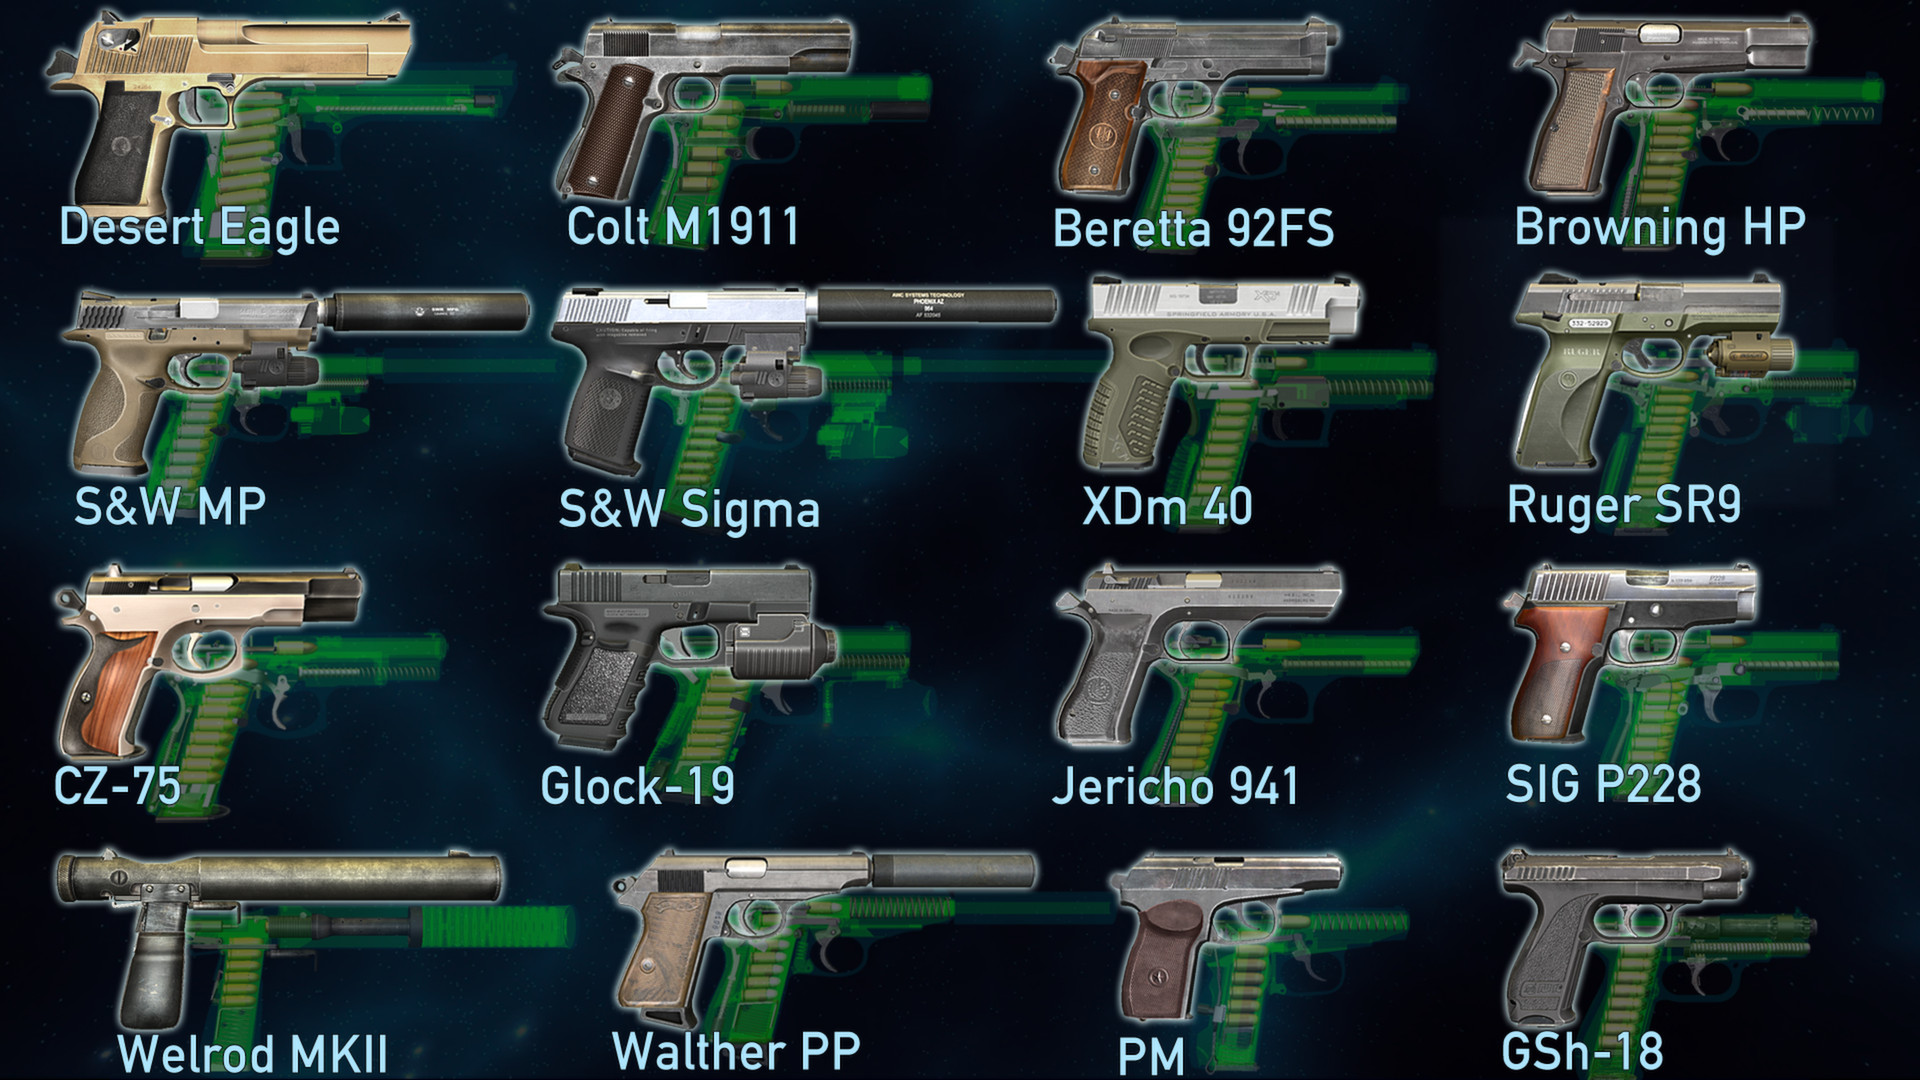 Como funcionam as pistolas nos games? 